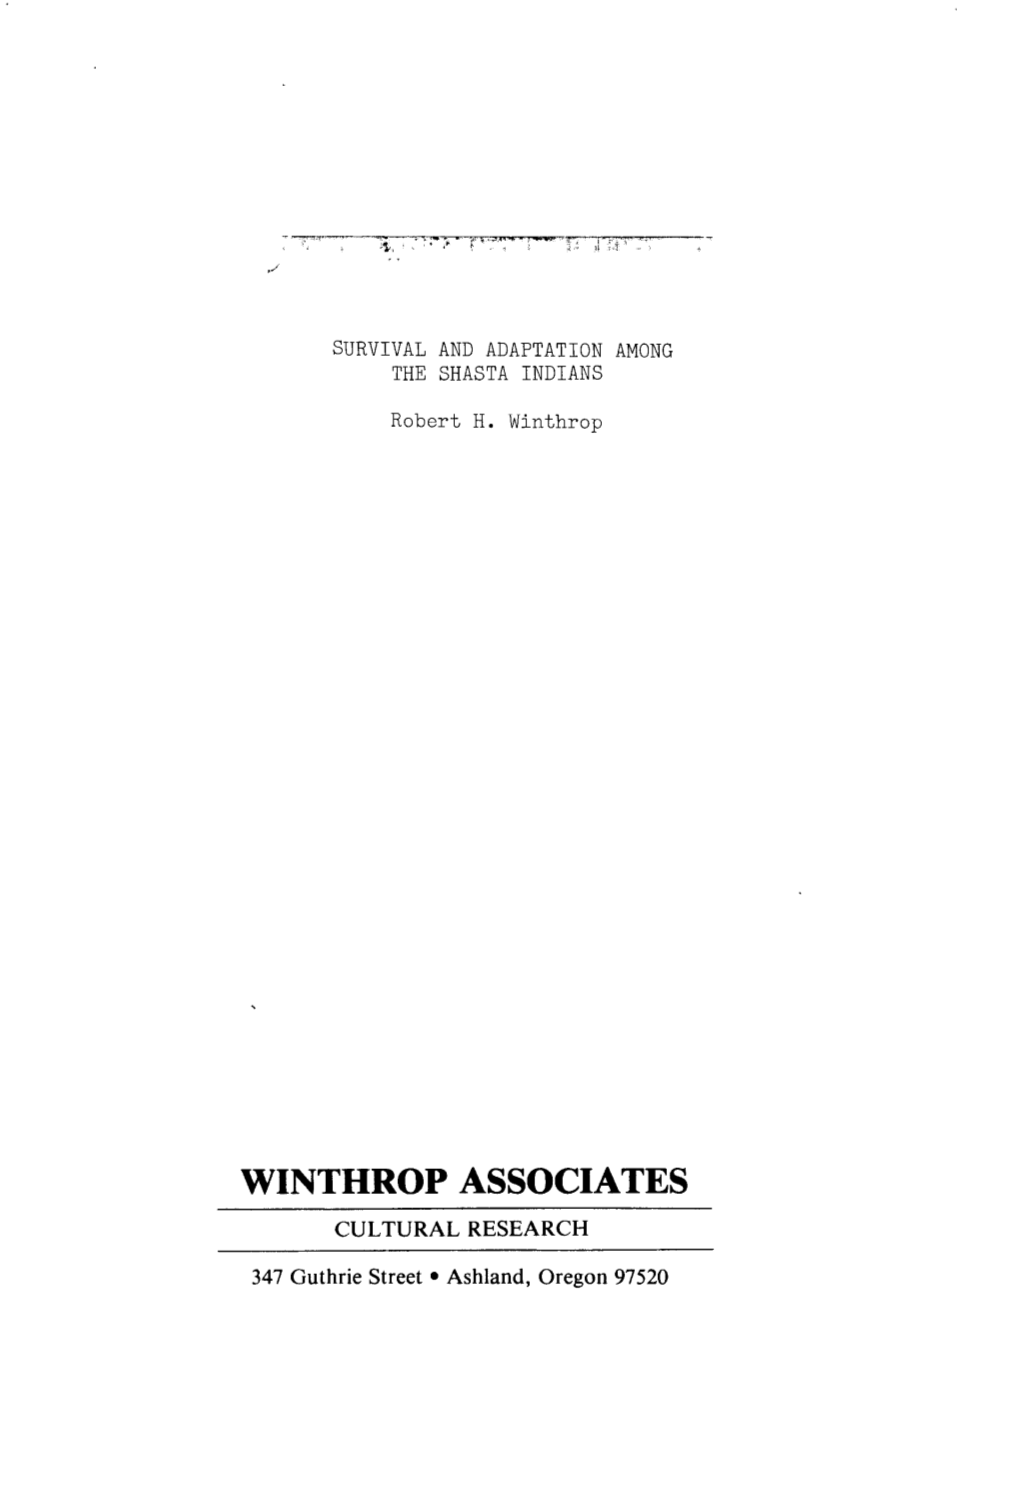 Winthrop Associates Cultural Research